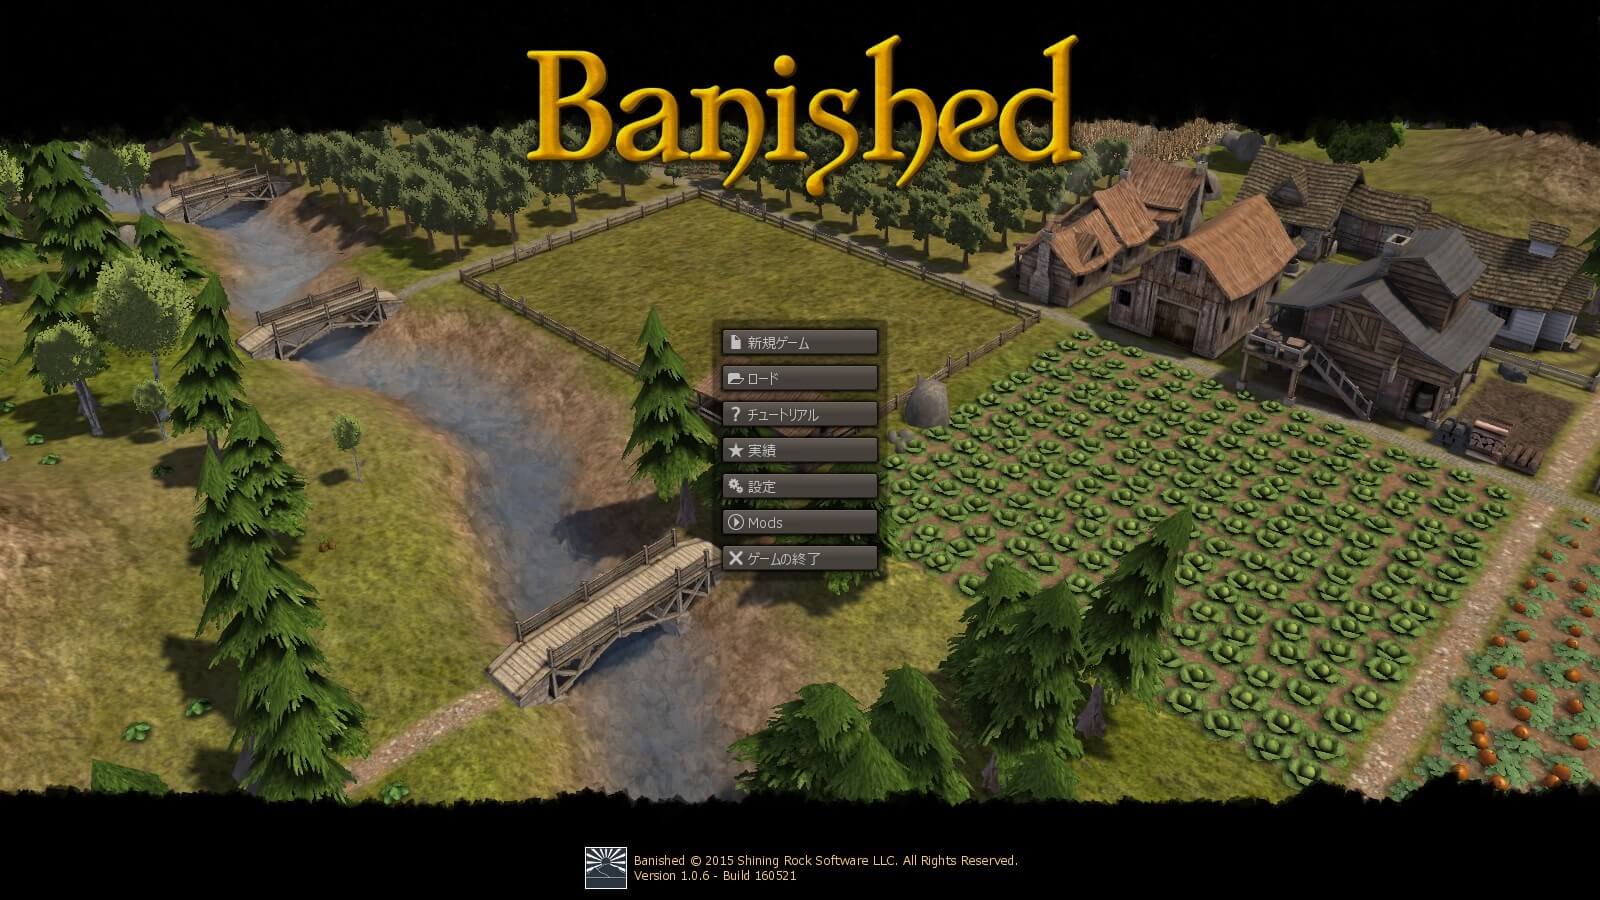 Banished 攻略ブログ 村の運営が軌道に乗るまで Game Play360